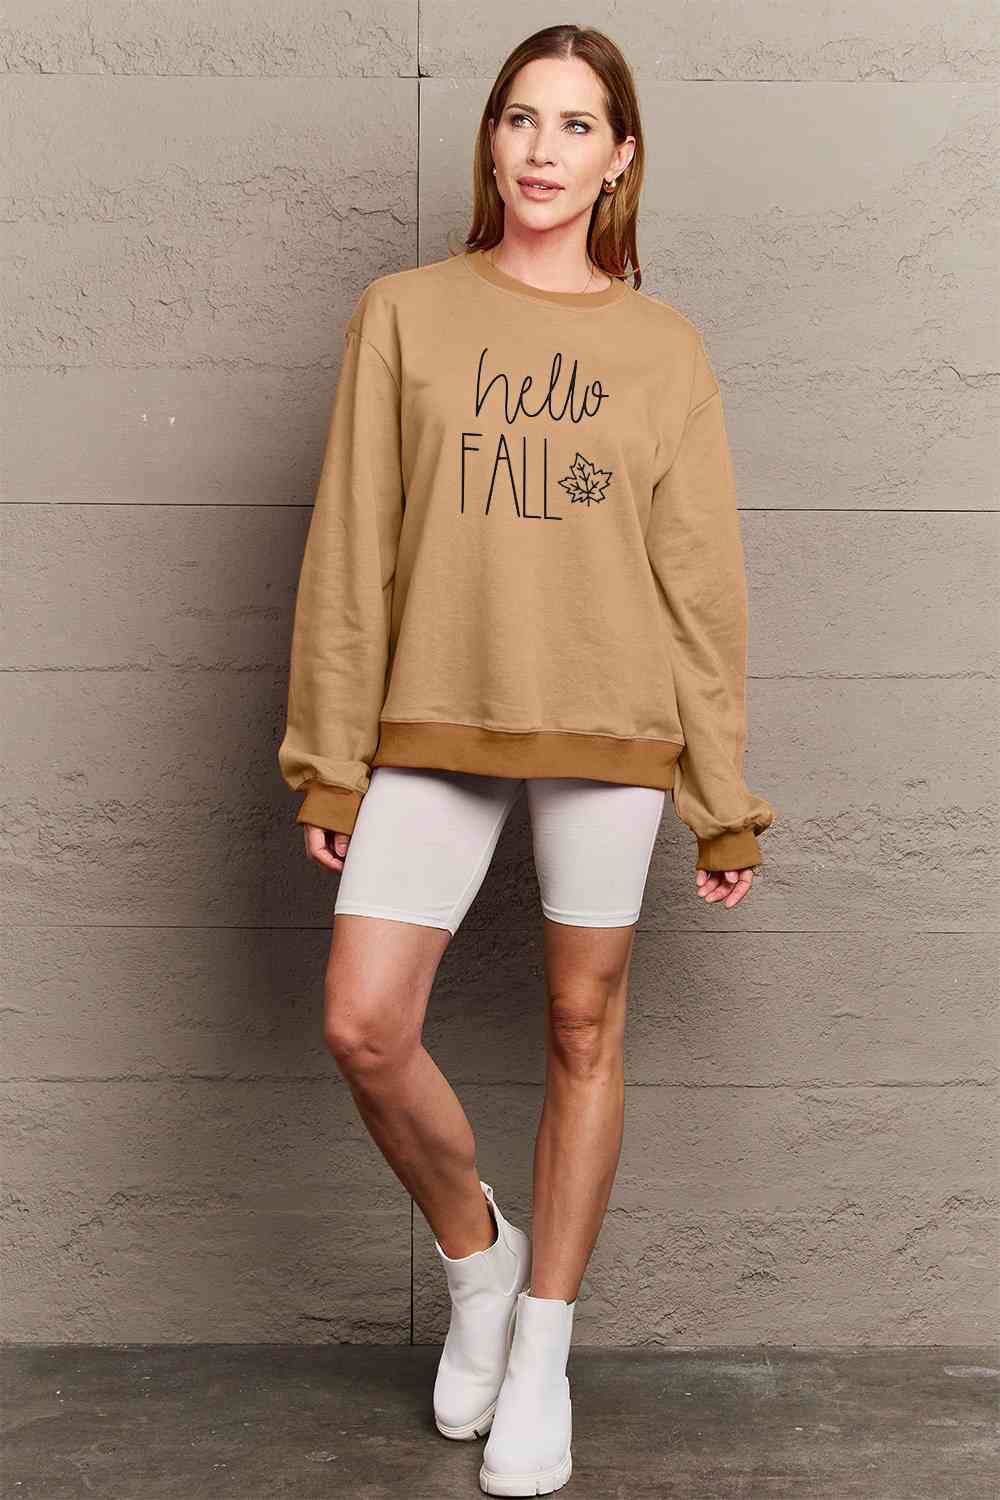 Simply Love Full Size HELLO FALL Graphic Sweatshirt